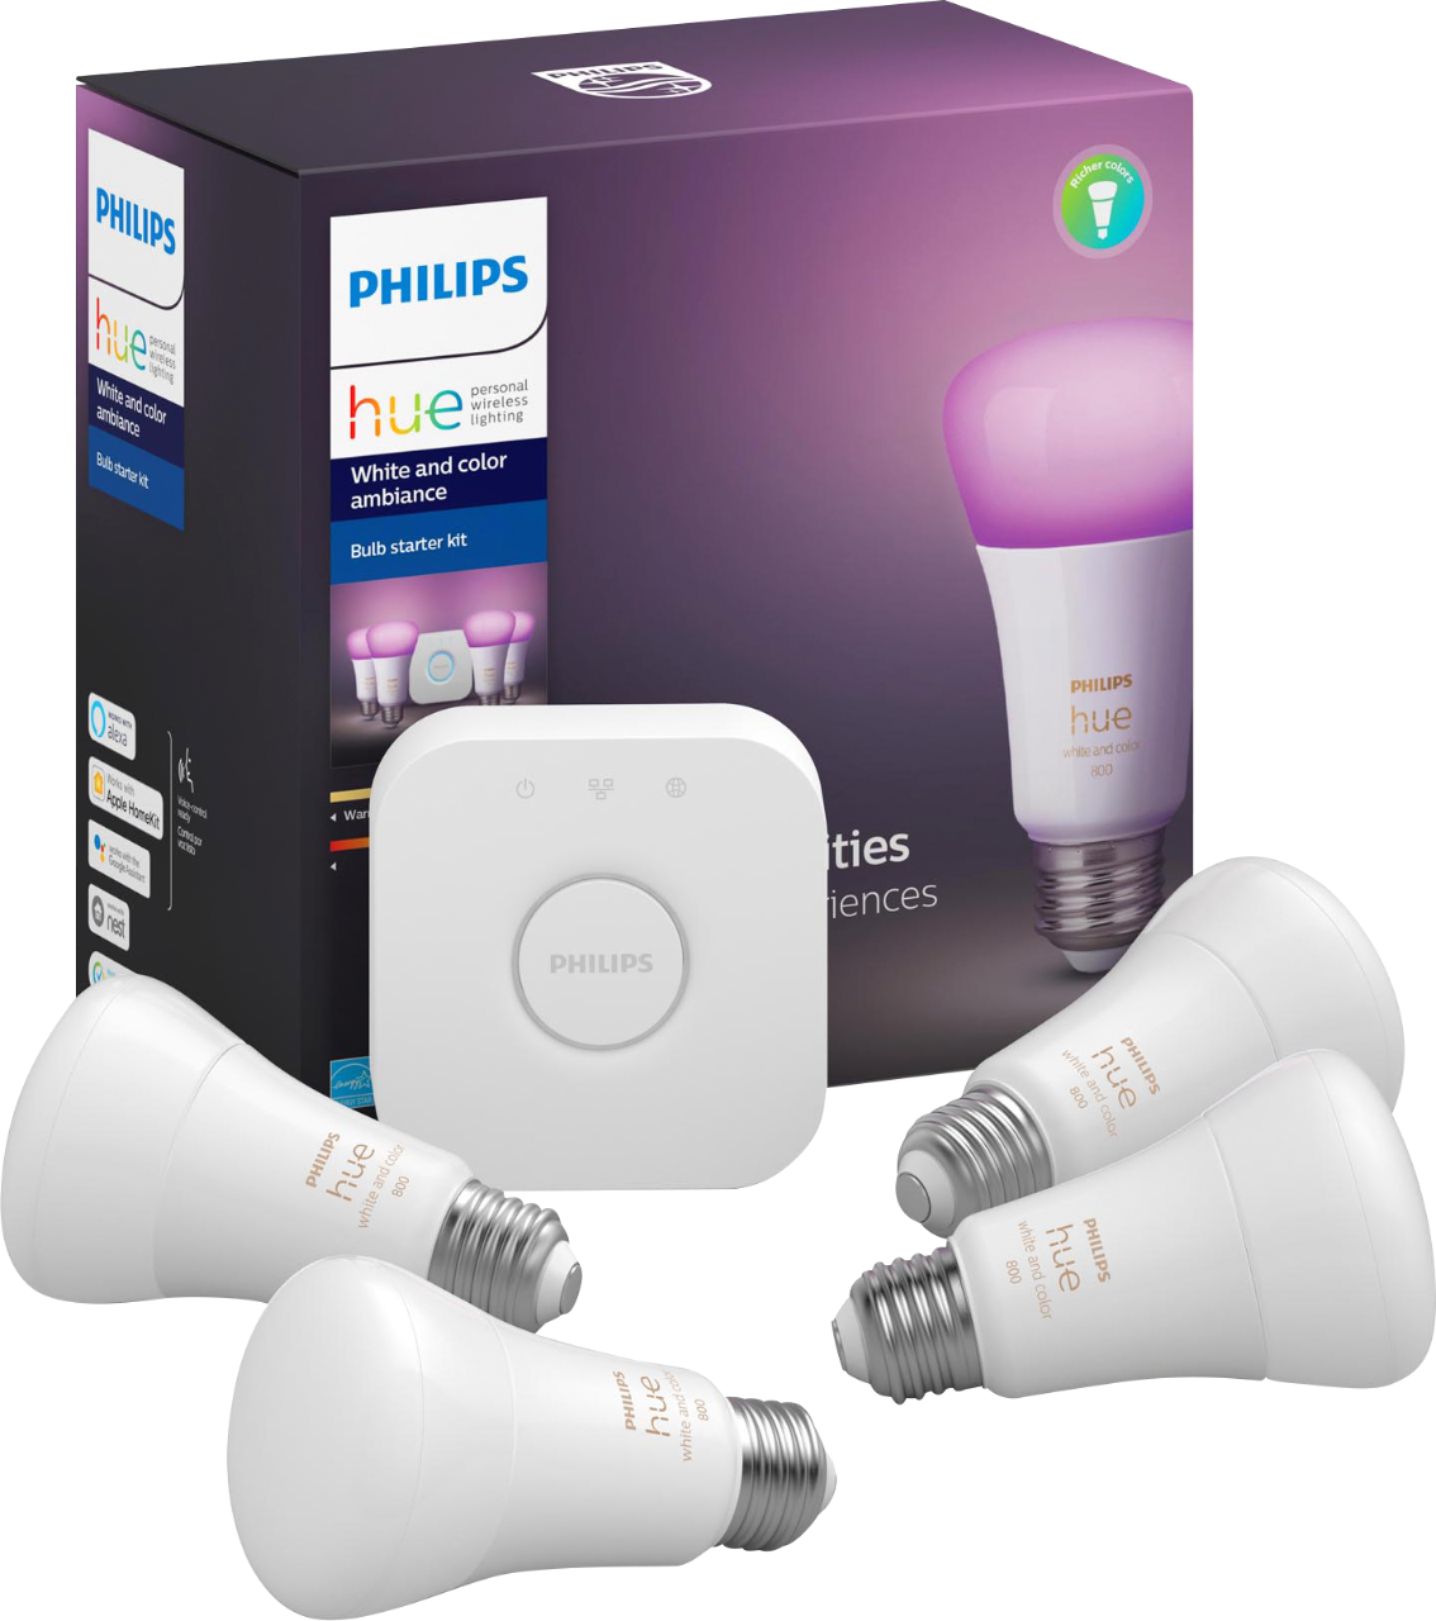 Philips Hue A19 LED Smart Bulb Starter Kit 548545 for sale online 